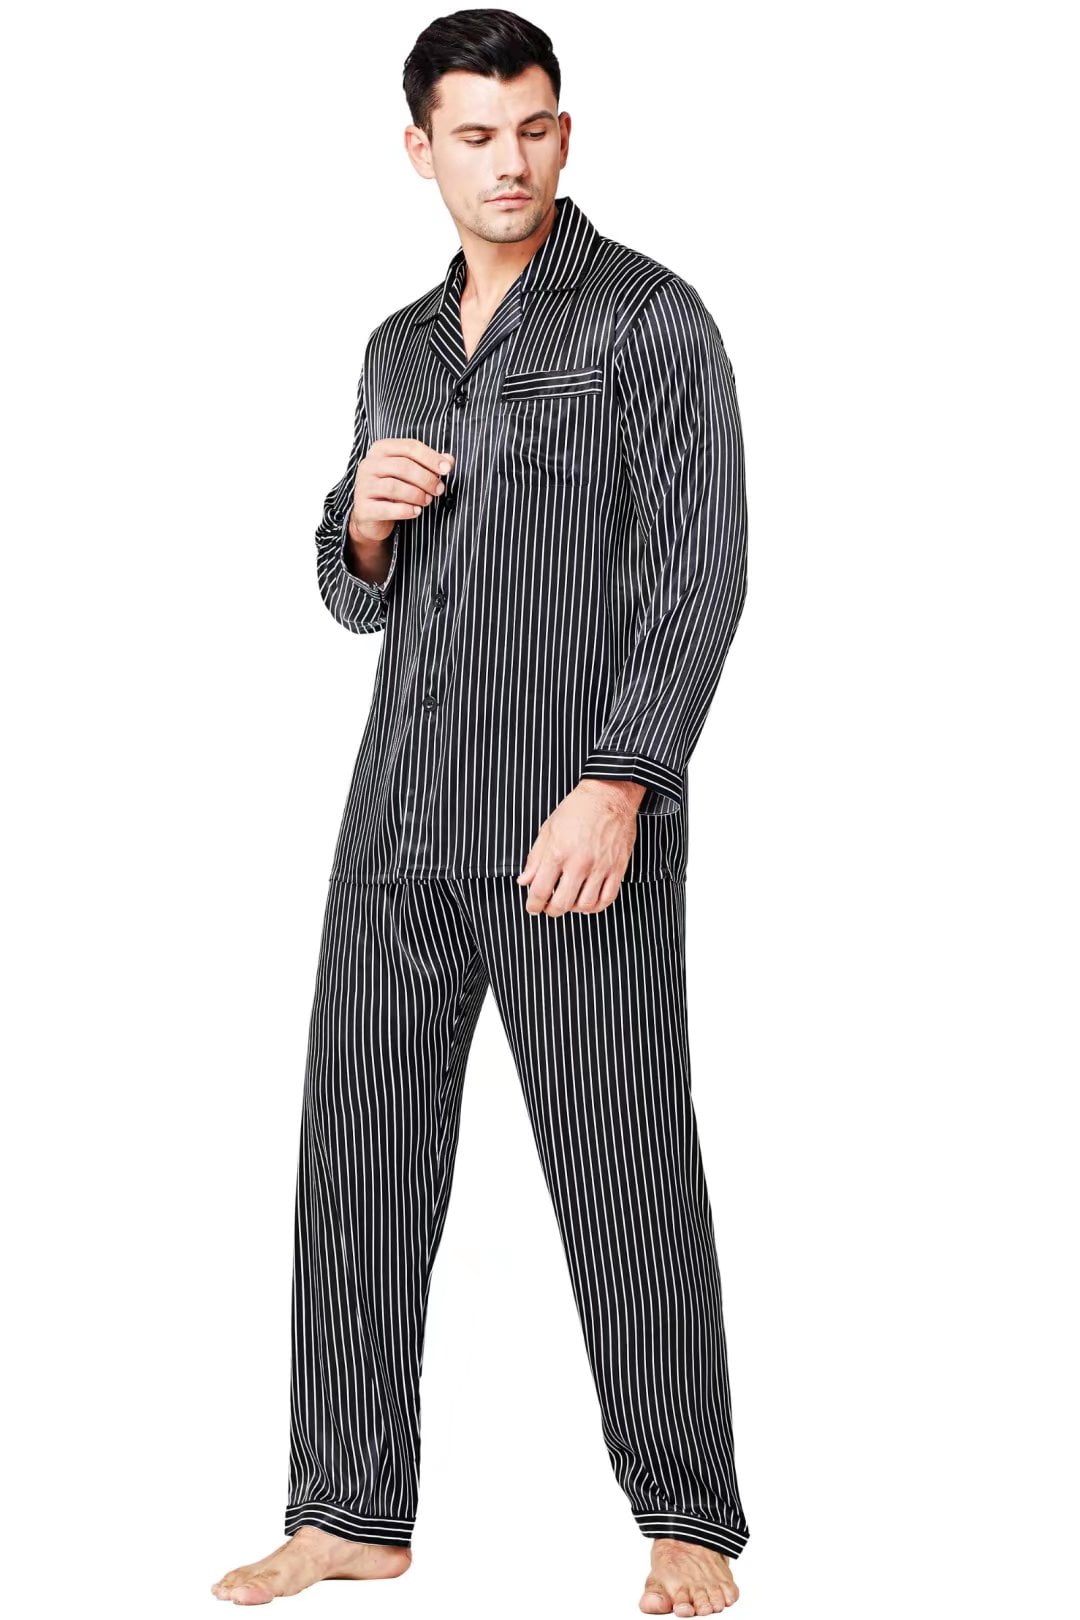 Lonxu Pajamas Set Mens Silk Satin Pajamas Long Sleeve Loungewear Two-Piece Sleepwear Button-Down Pj Set S-XXXXL